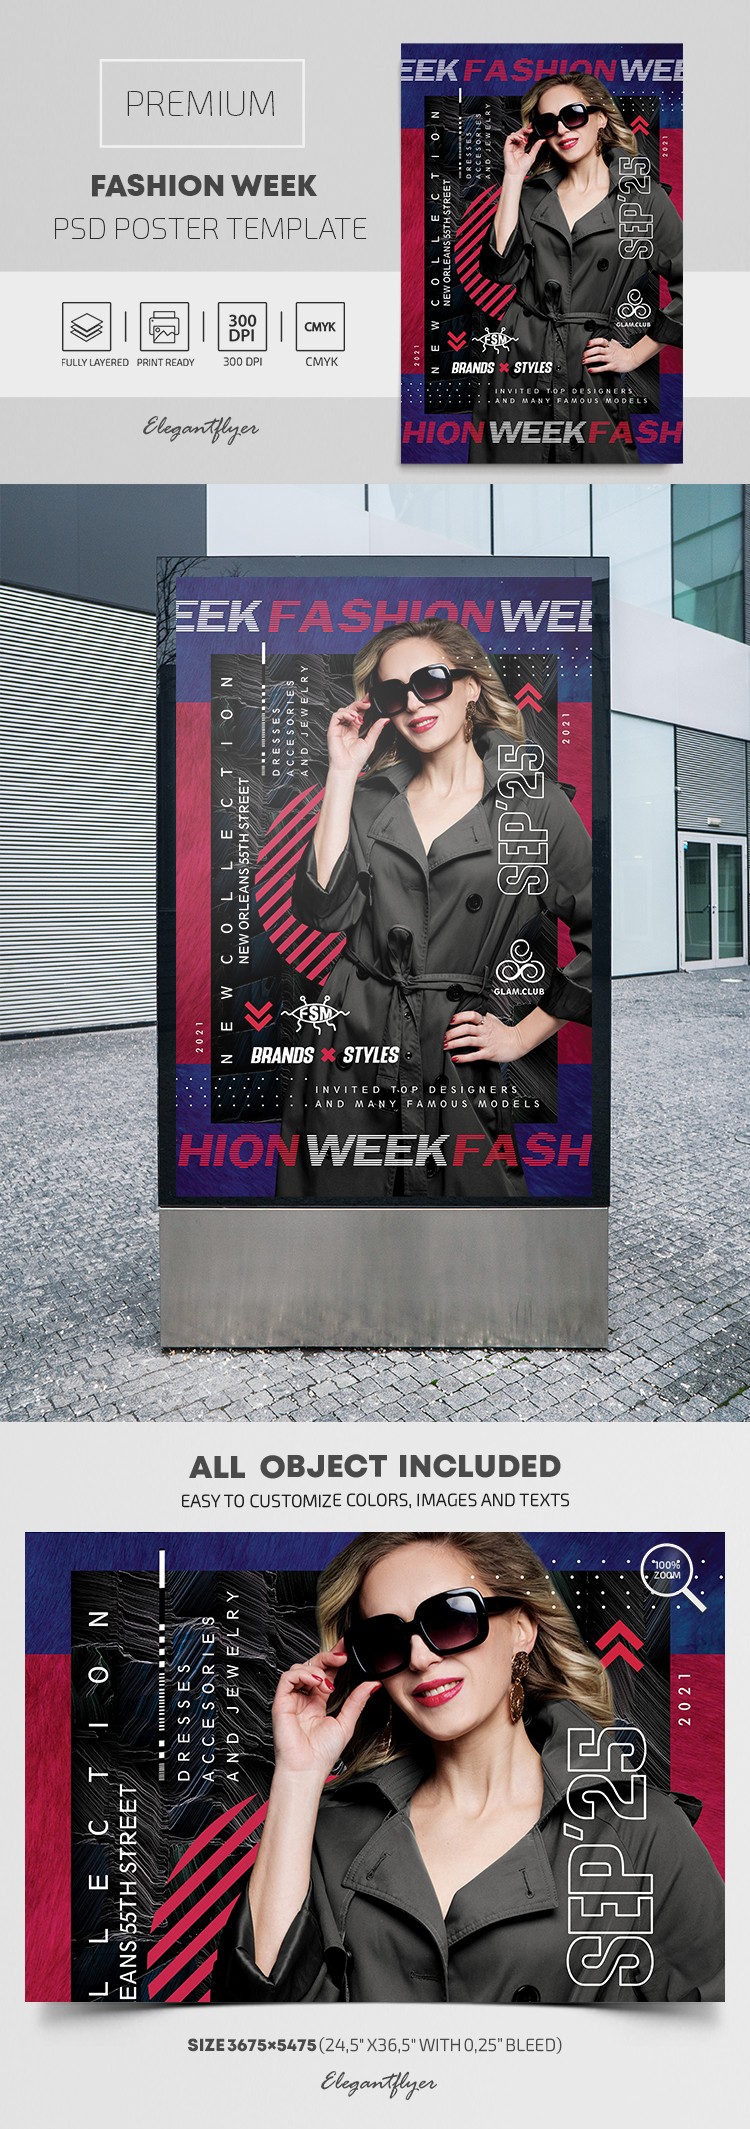 Mode-Woche-Plakat by ElegantFlyer